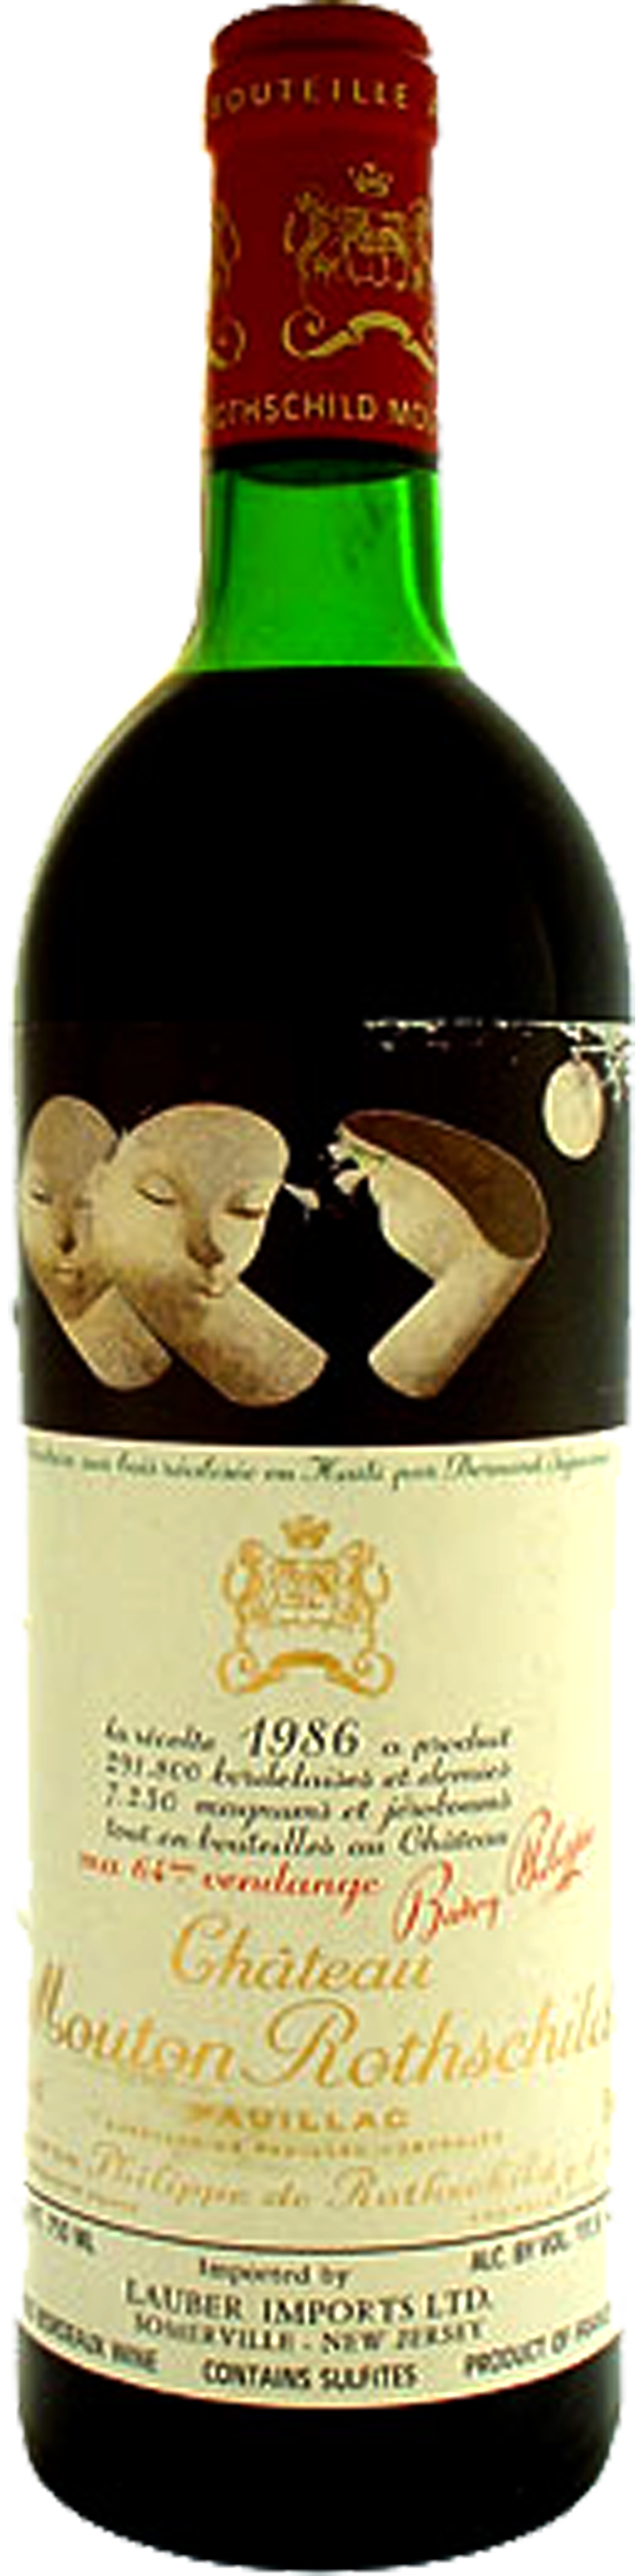 Bottle shot of 1986 Château Mouton Rothschild, 1er Cru Pauillac